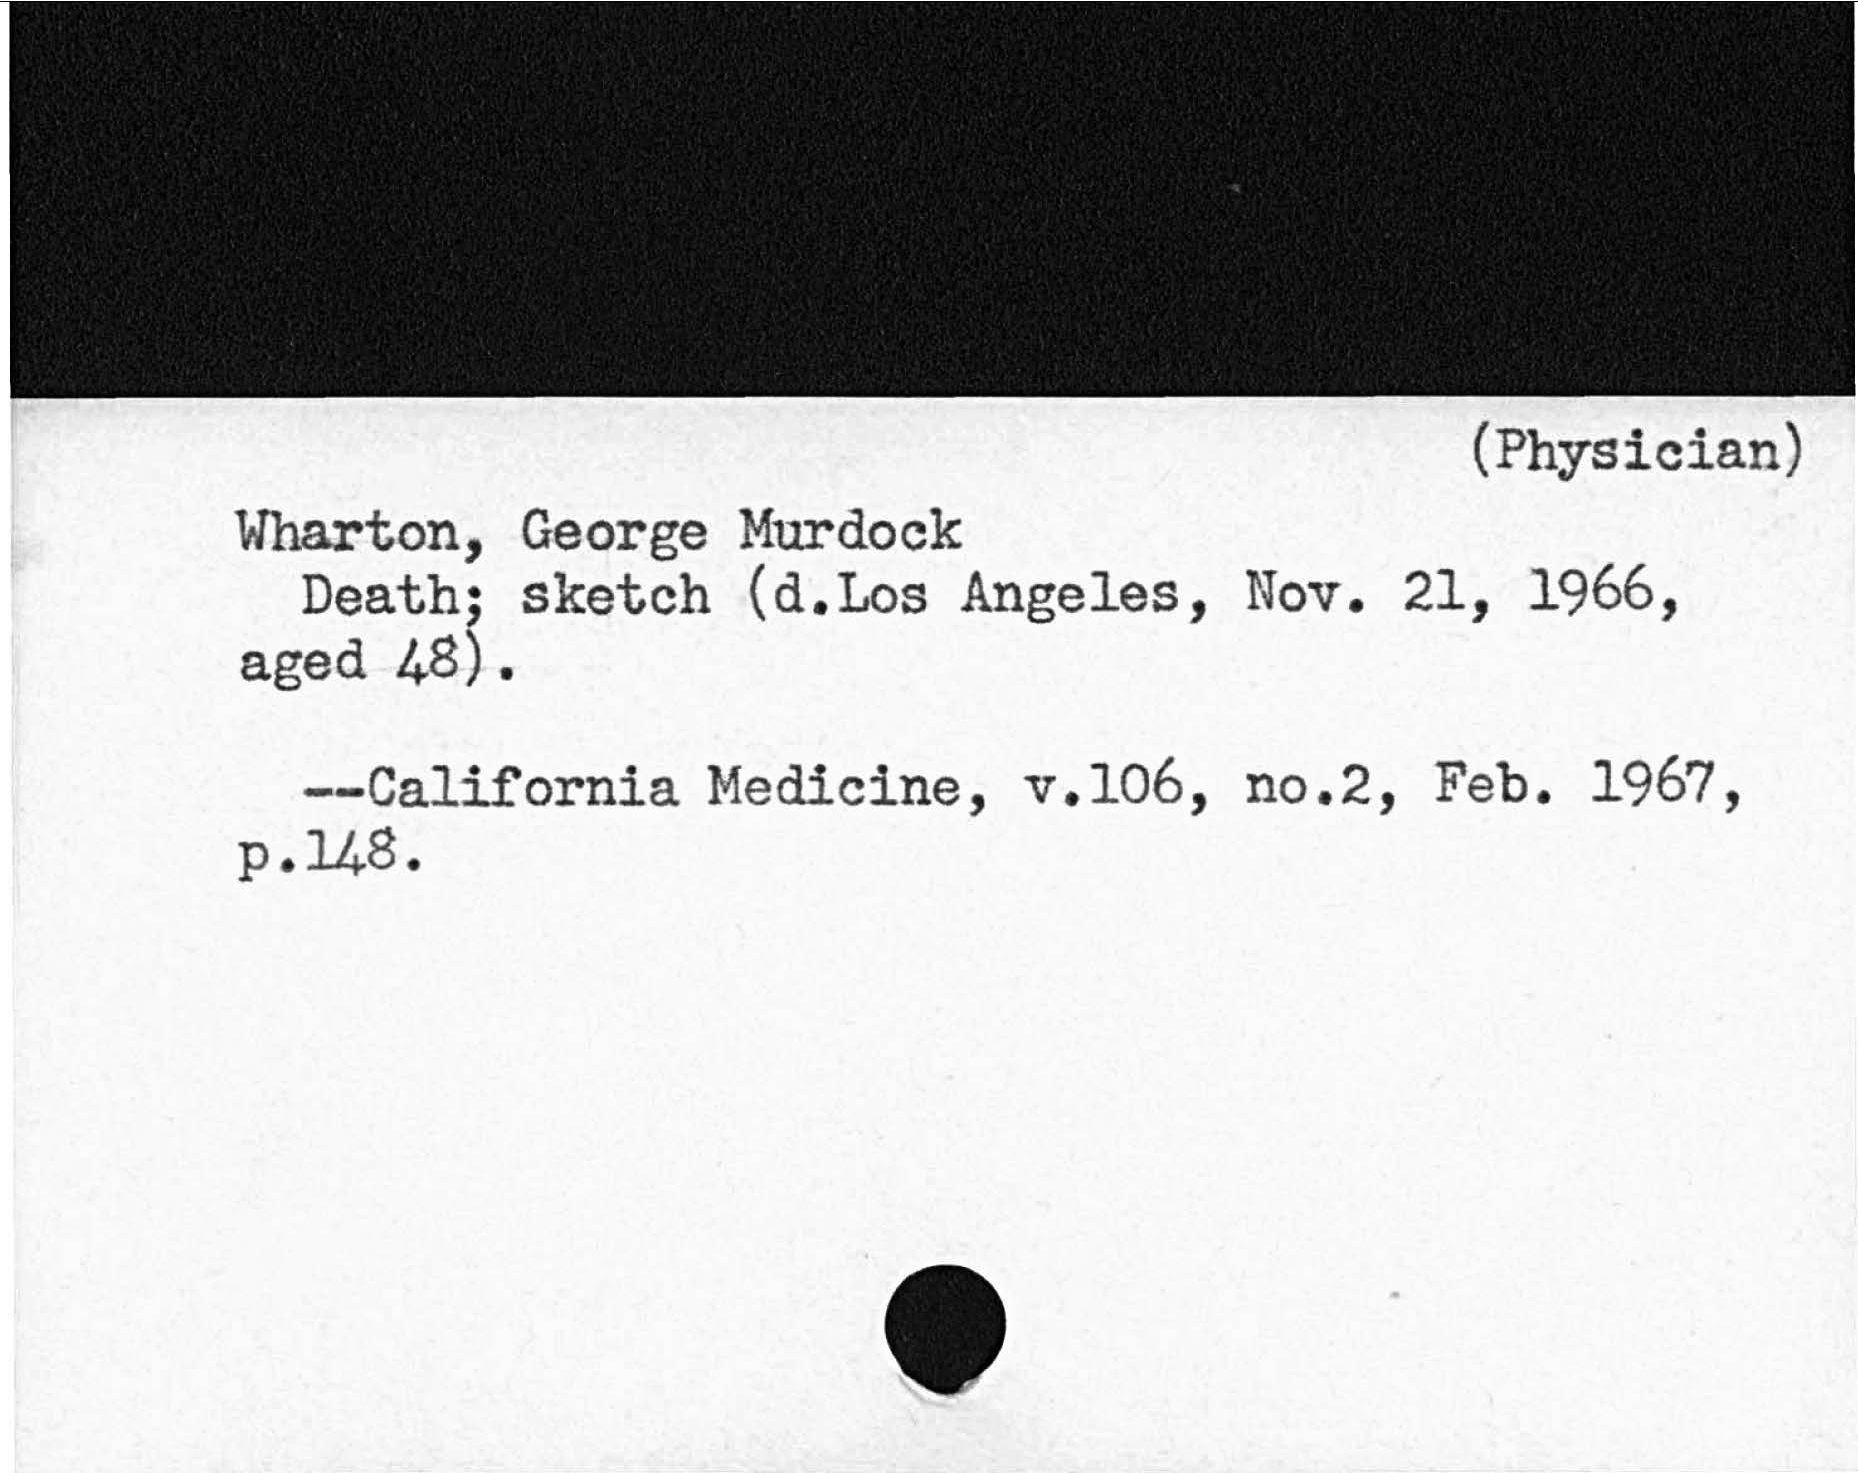 PhysicianWharton George MurdockDeath; sketch d. Los Angeles, Nov. 21, 1966,aged 48.California Medicine, v. l06, no. 2, Feb. 1967,p. 148